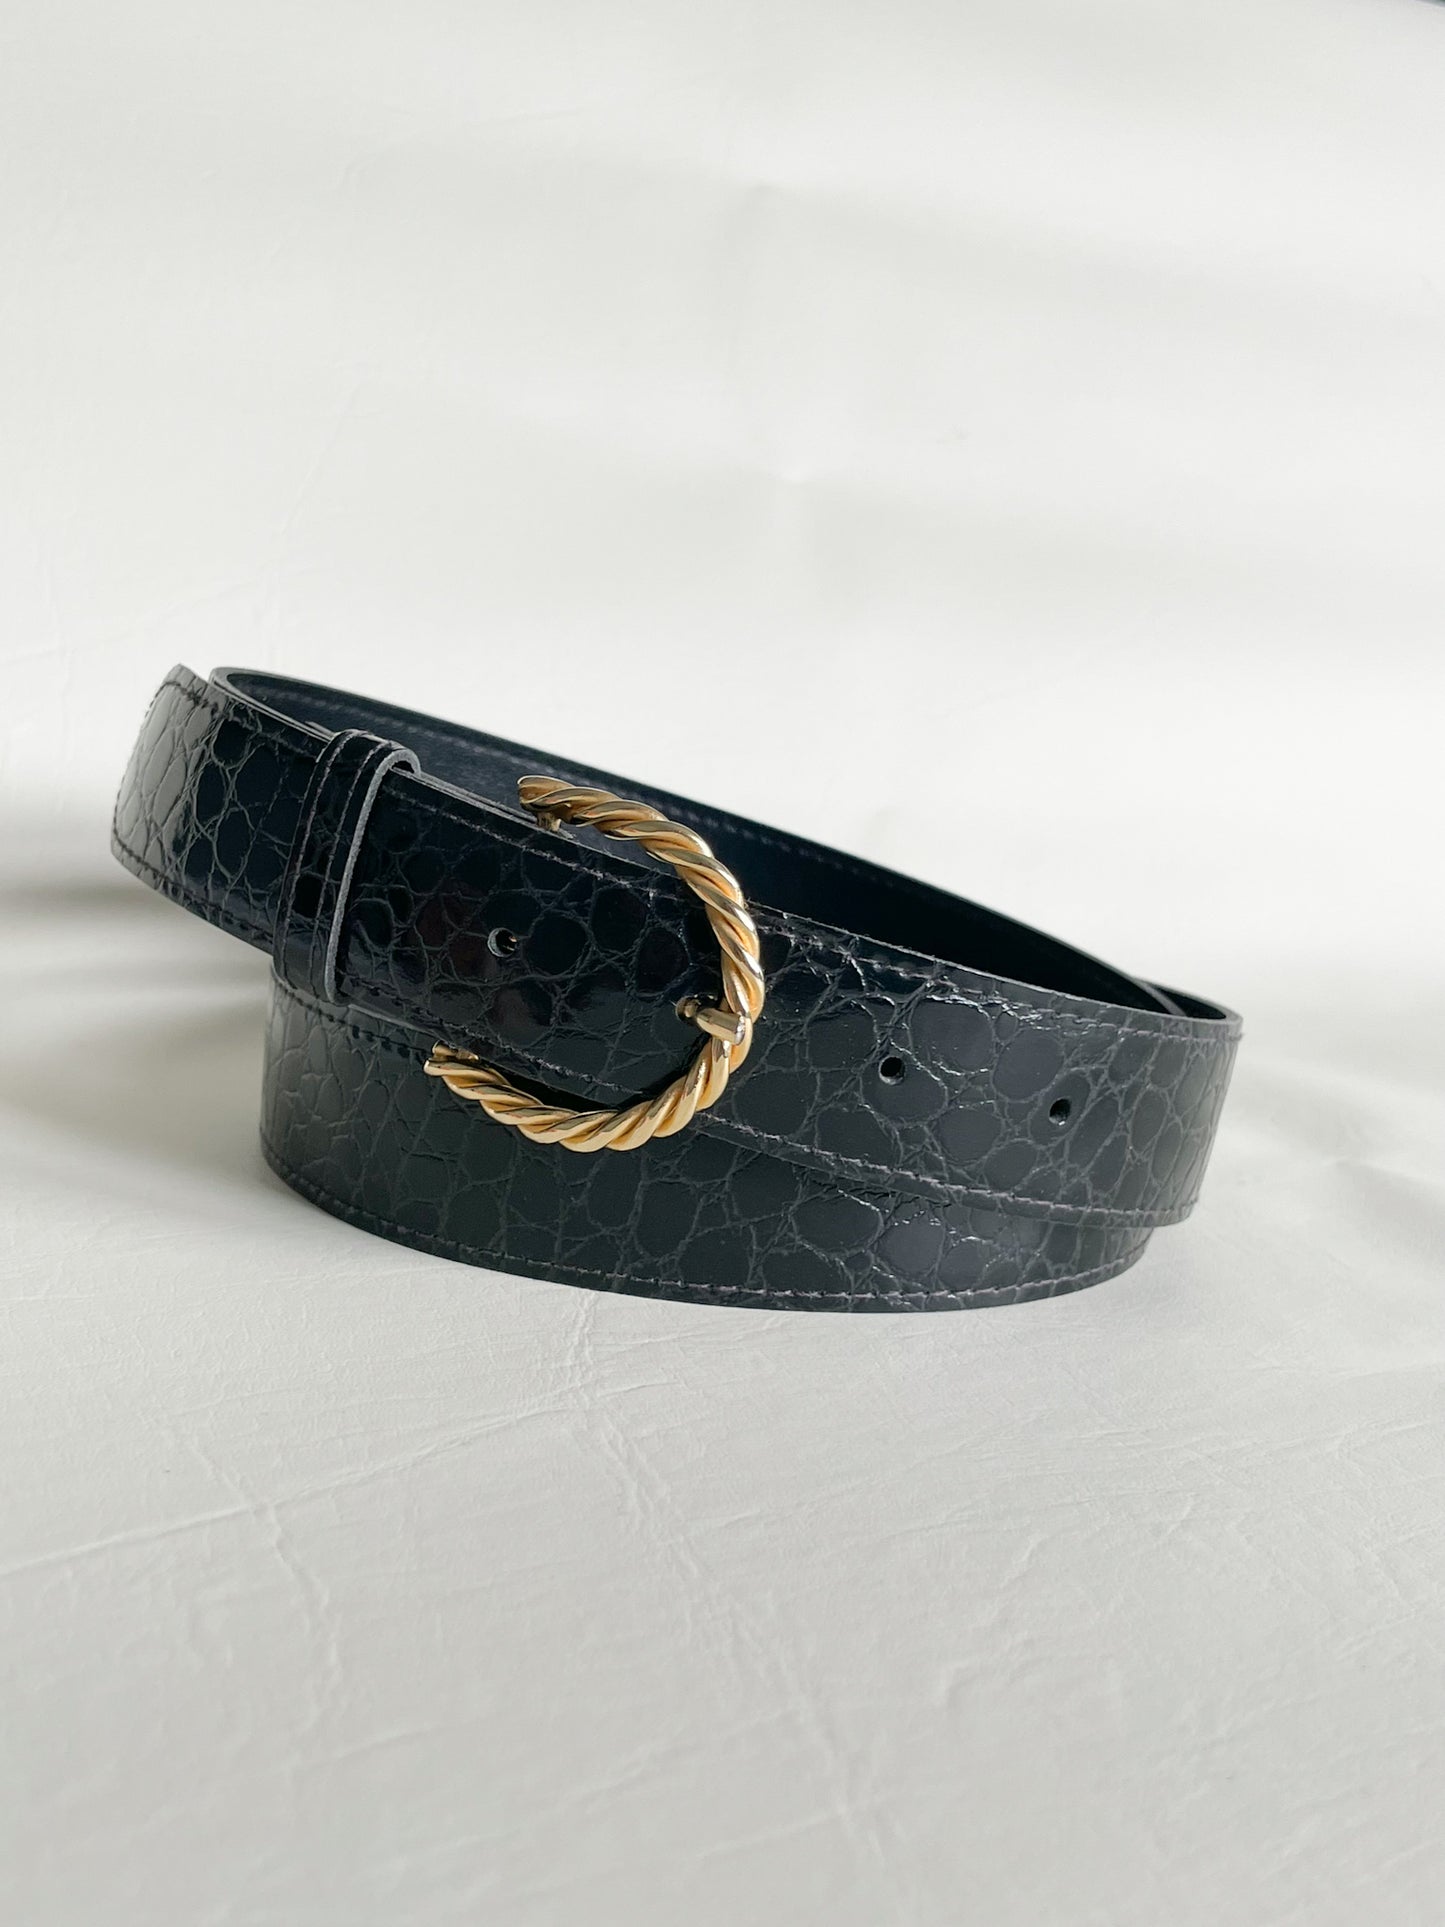 Vintage Black Faux Patent Leather Gold Rope Hardware Belt - Medium